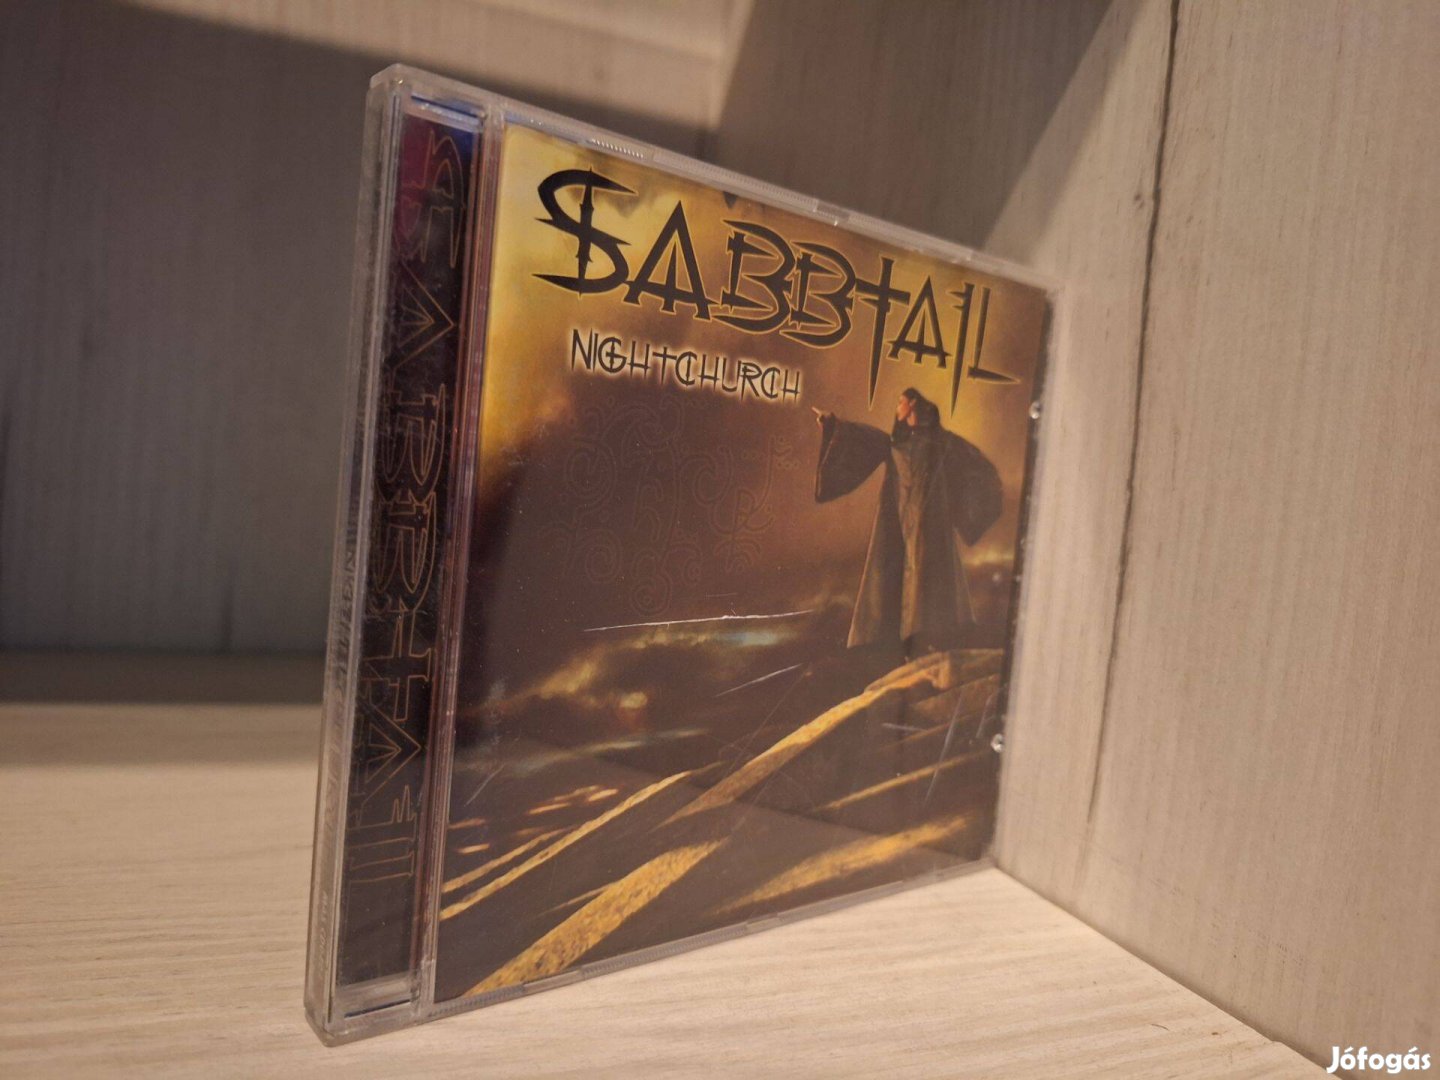 Sabbtail - Nightchurch CD